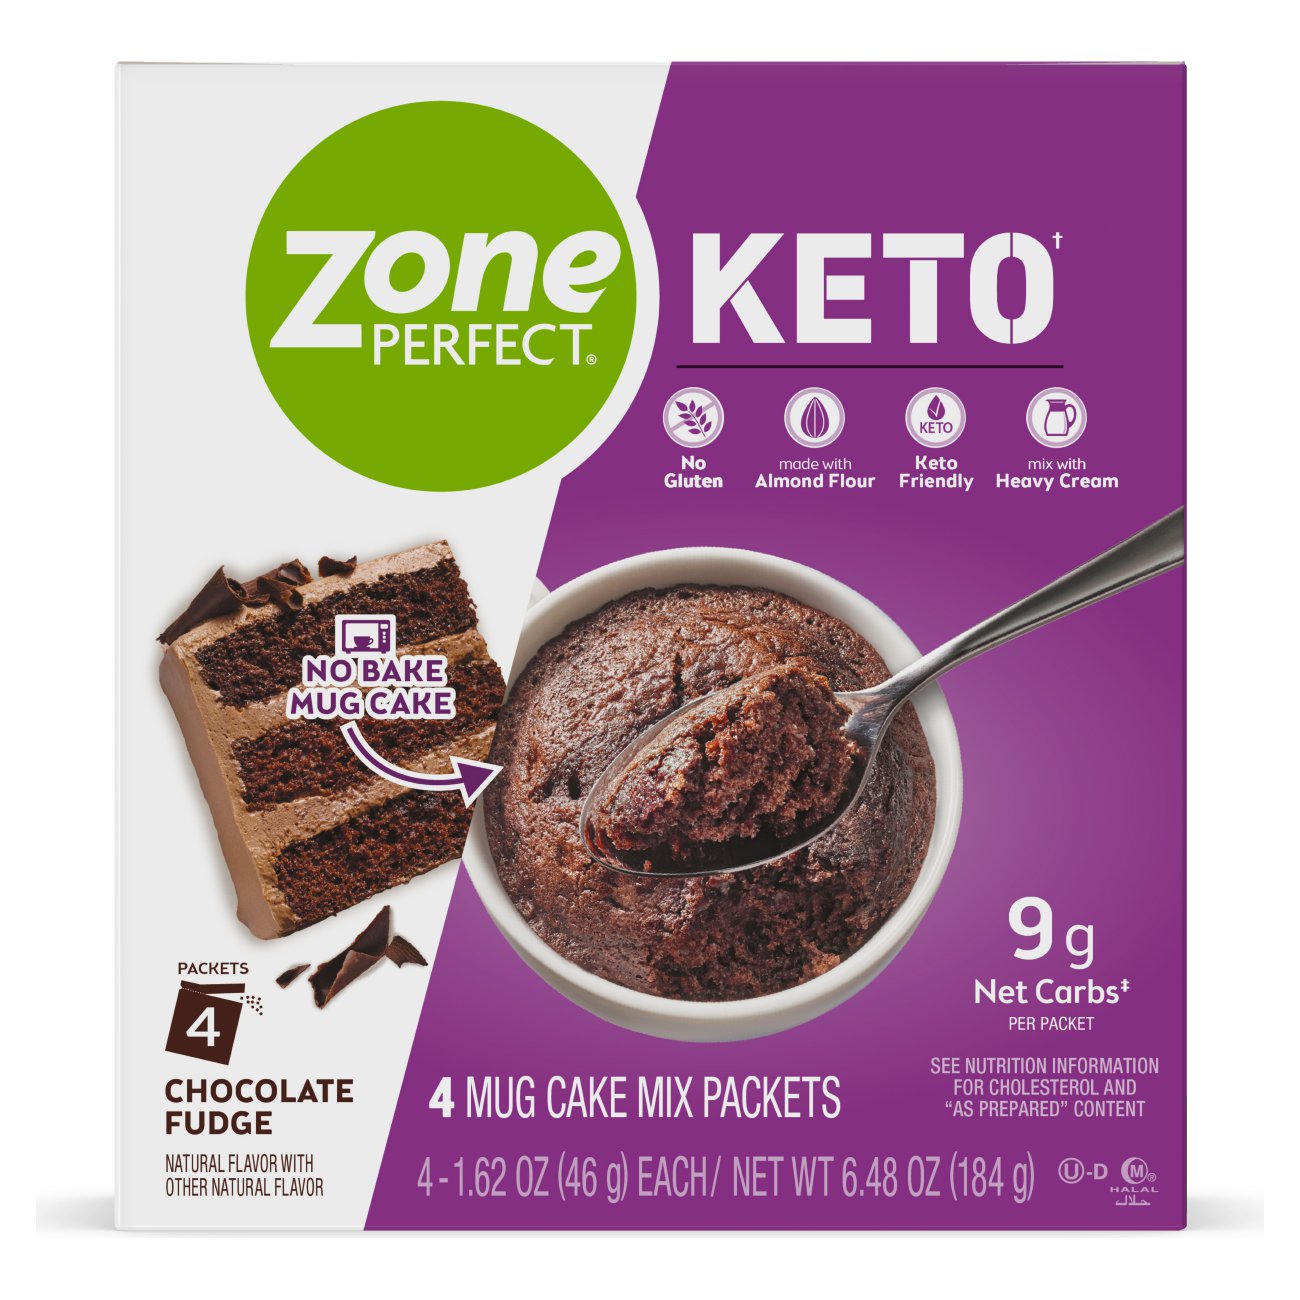 ZonePerfect Keto Chocolate Fudge Mix, 1.62 oz, 4 Count - image 1 of 7